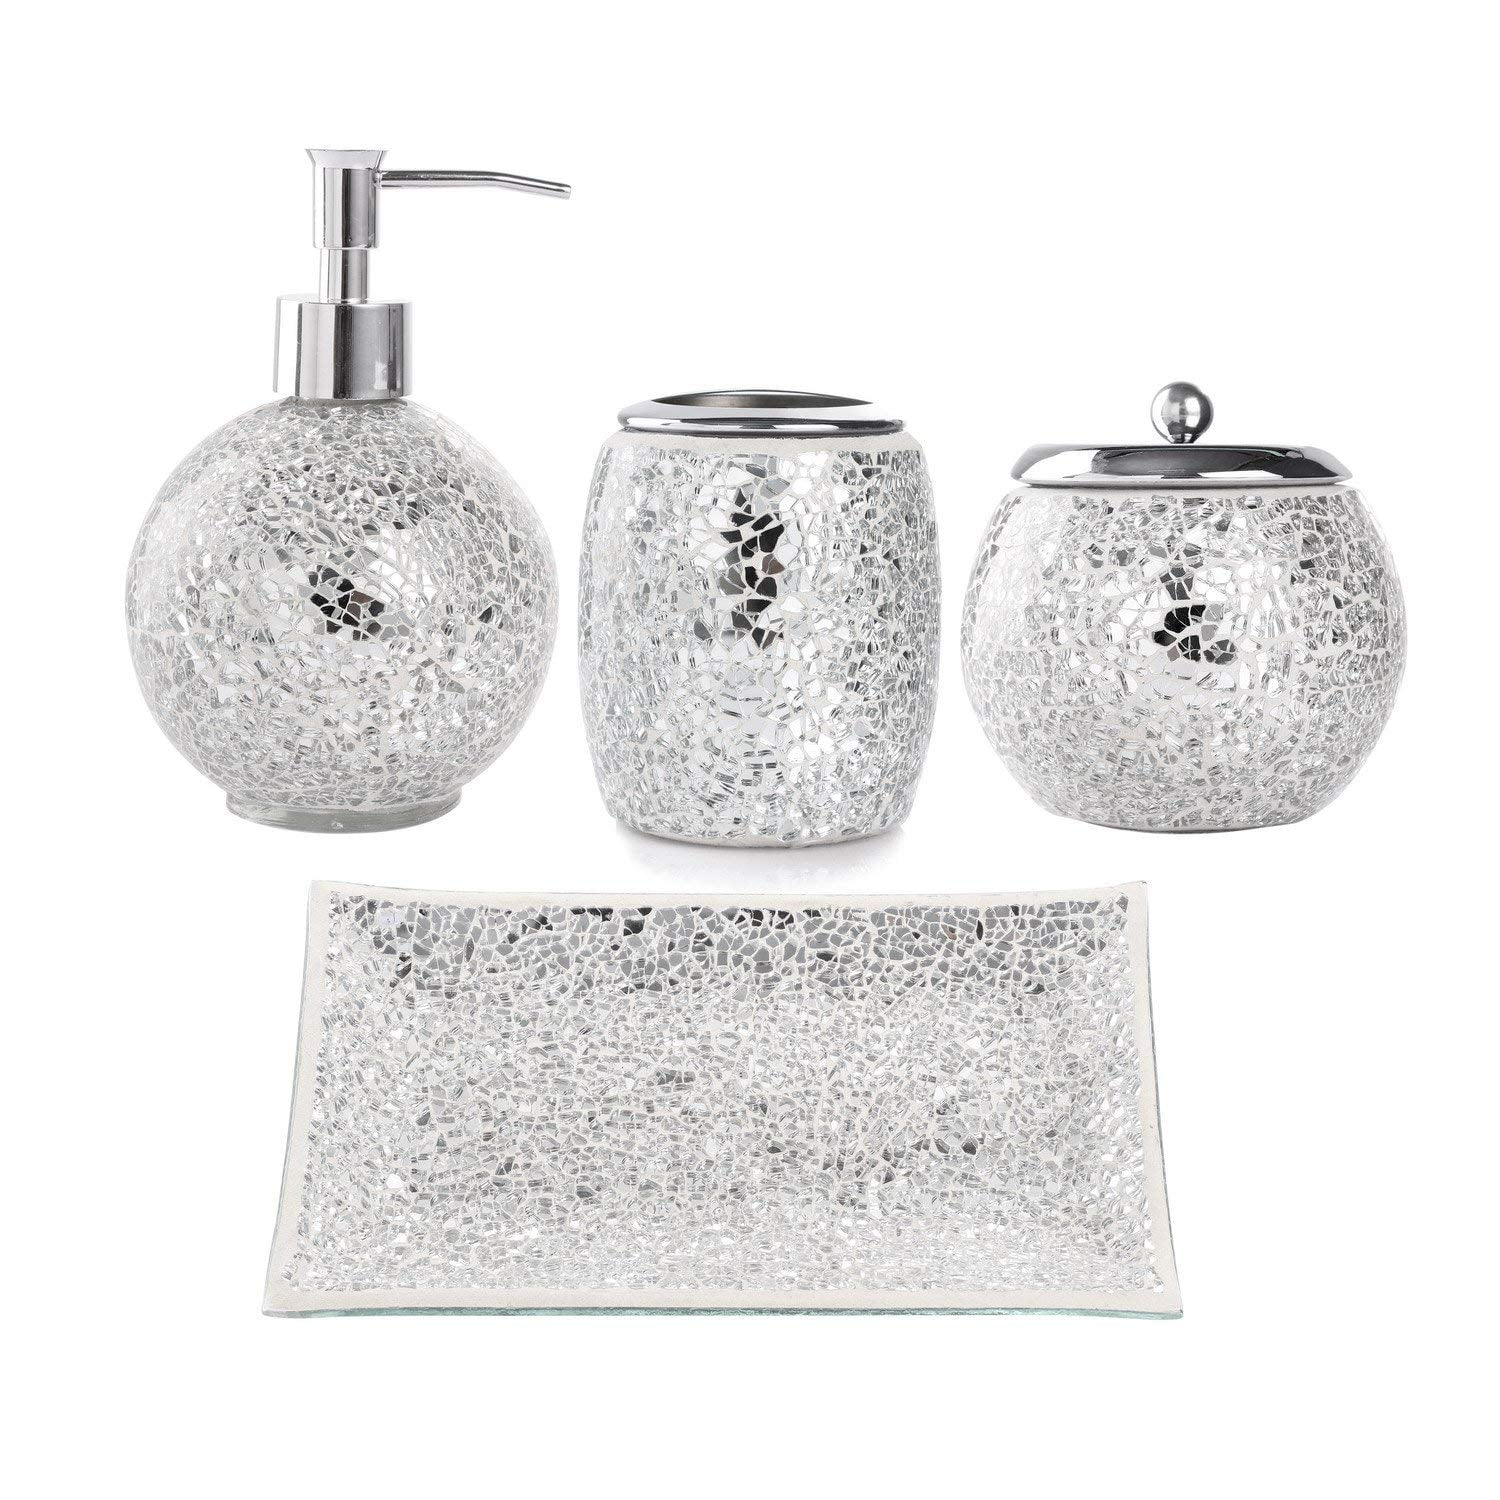 Mosaic Glass Bathroom Accessories, Modern White Bathroom Accessories Set